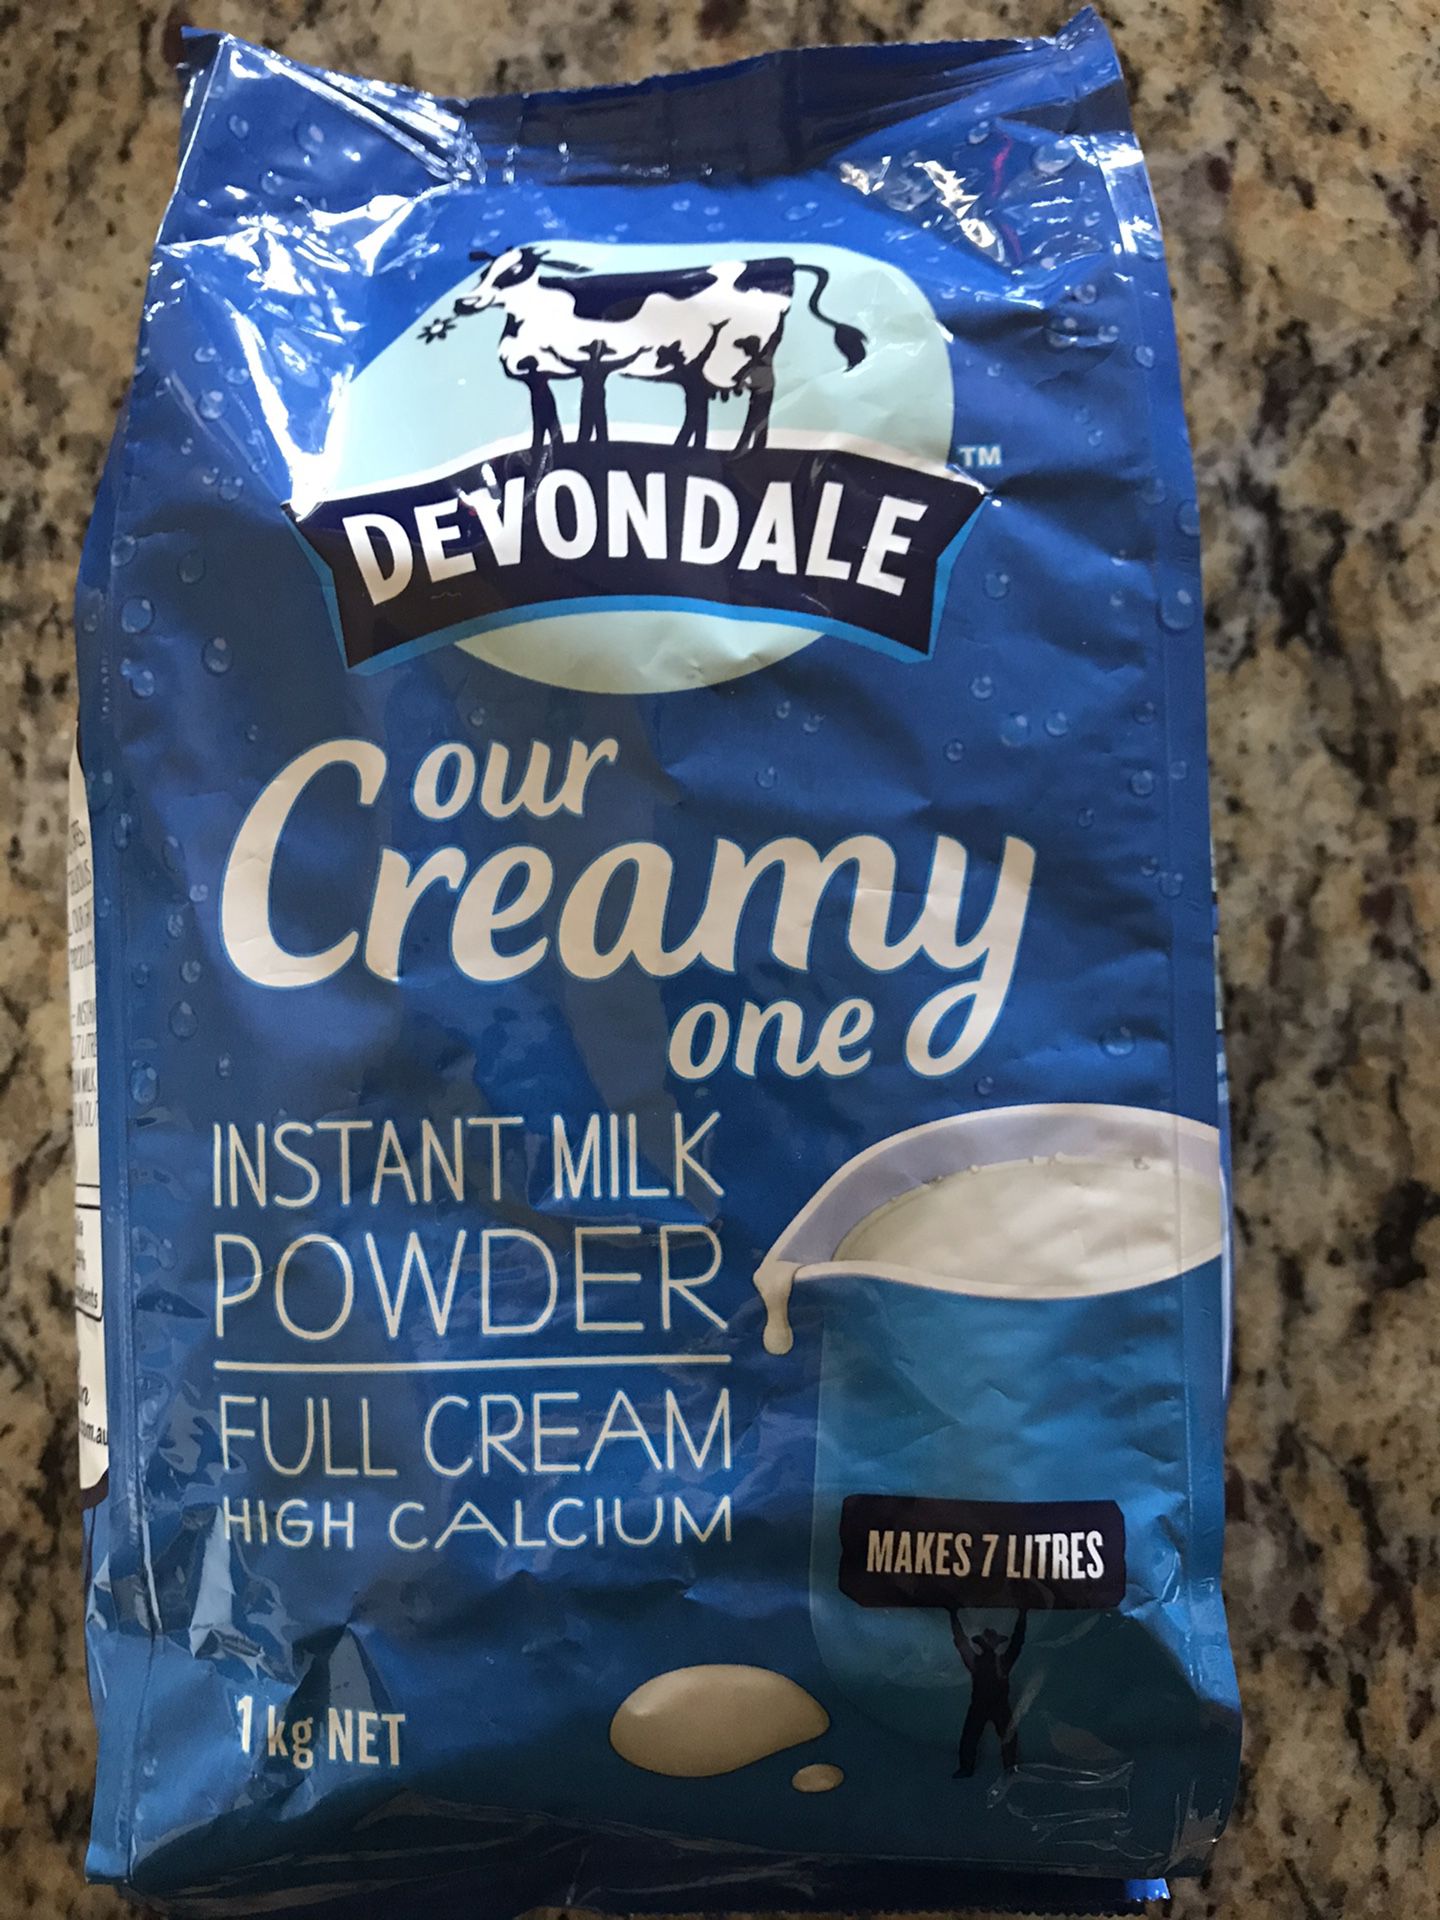 Instant powder milk from Australia